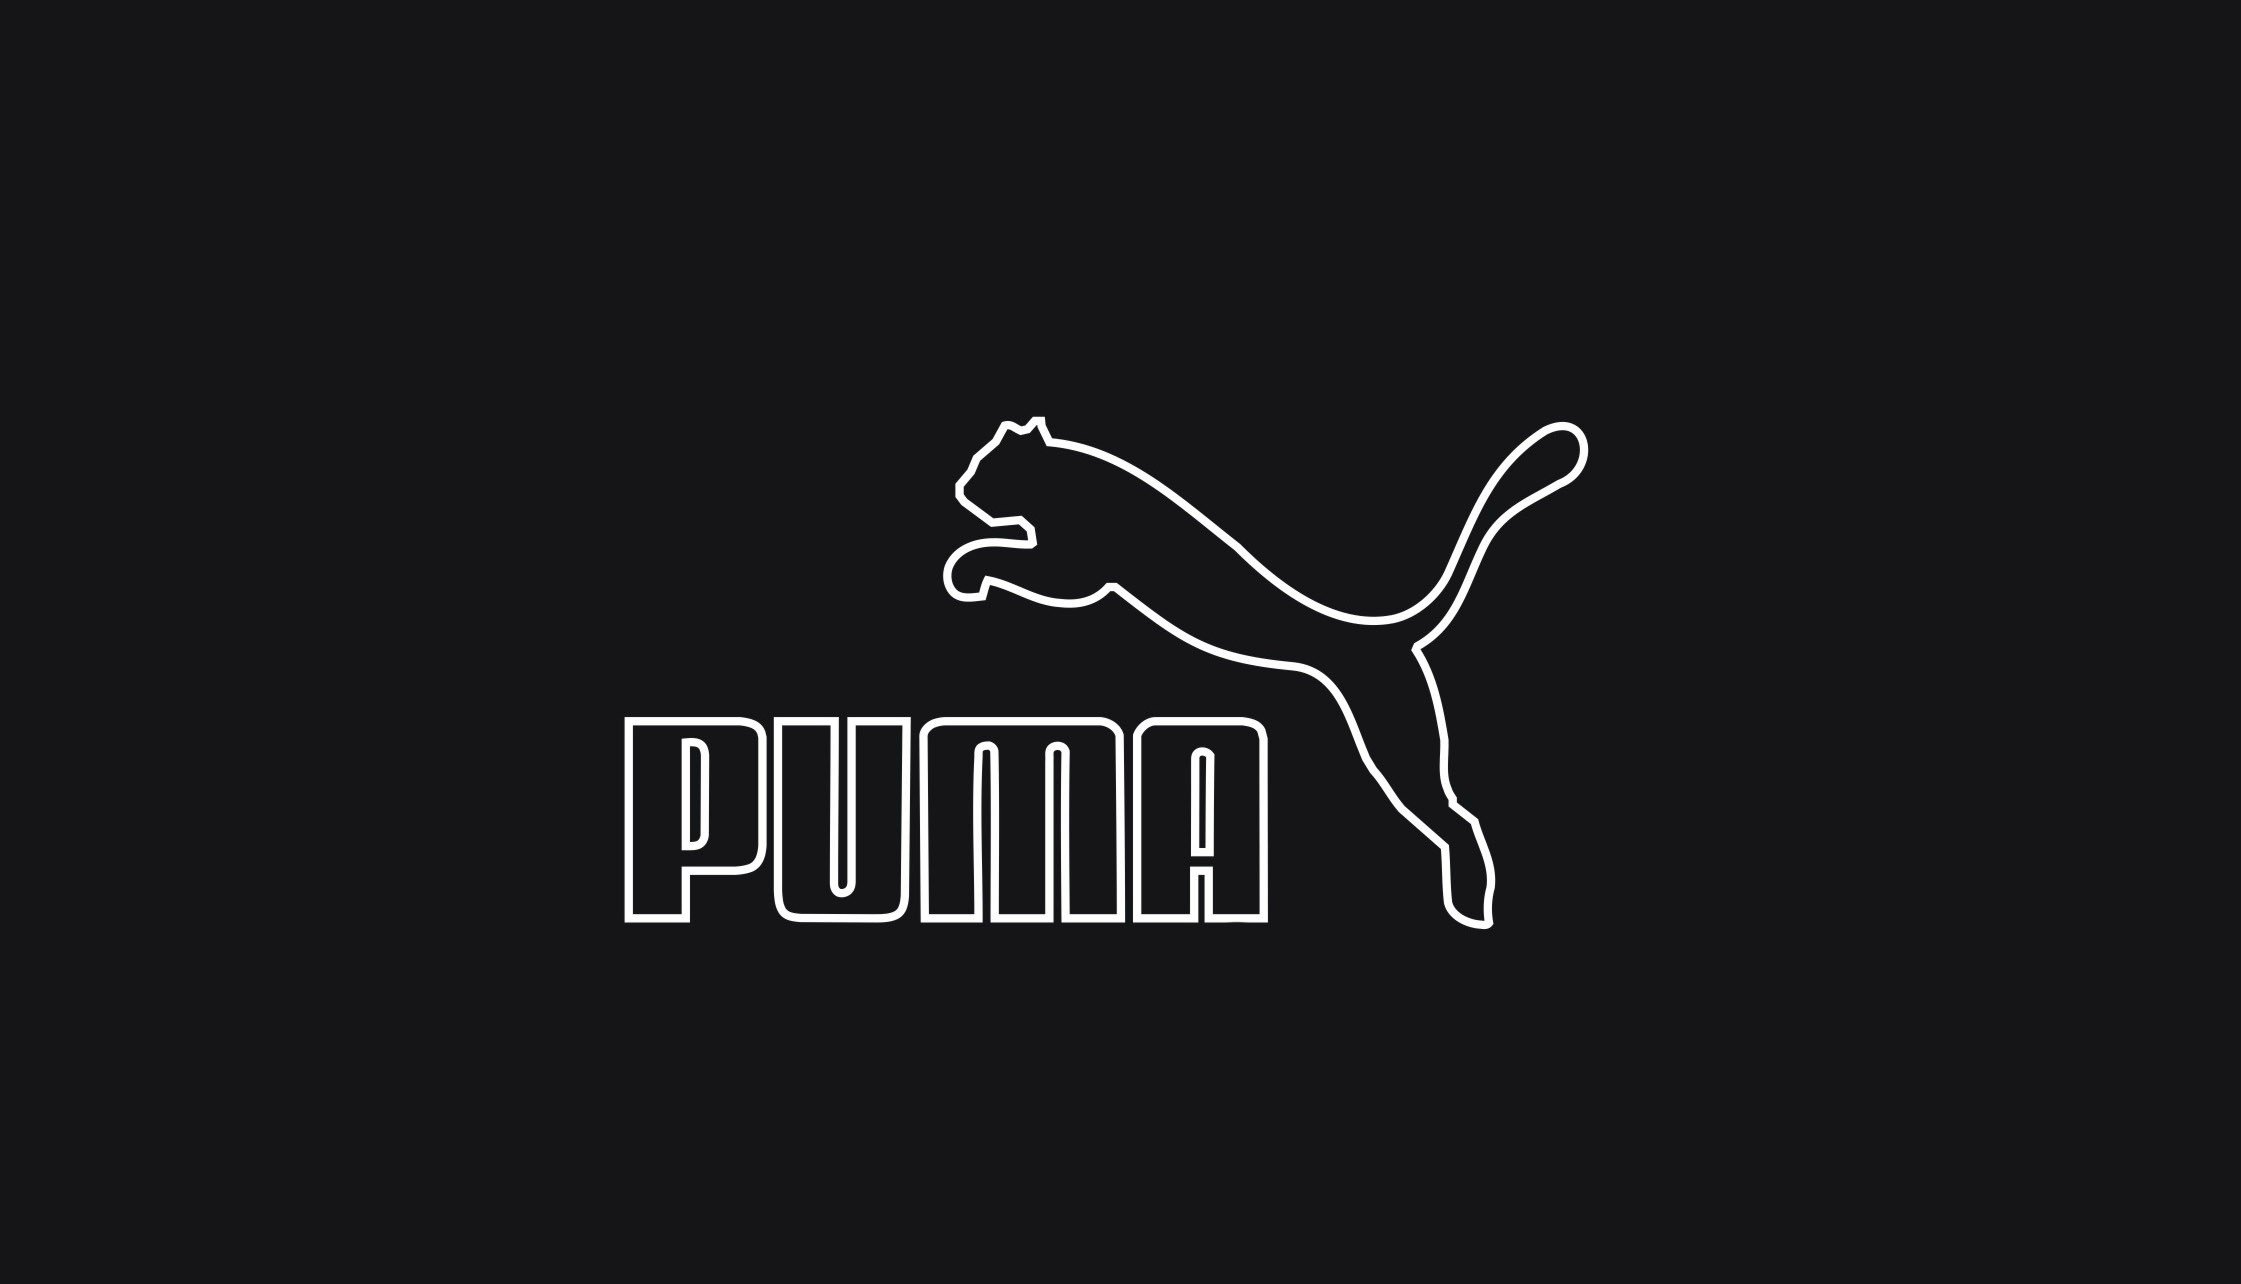 Puma Sports Brand Logo Full HD Wallpapers   Large HD